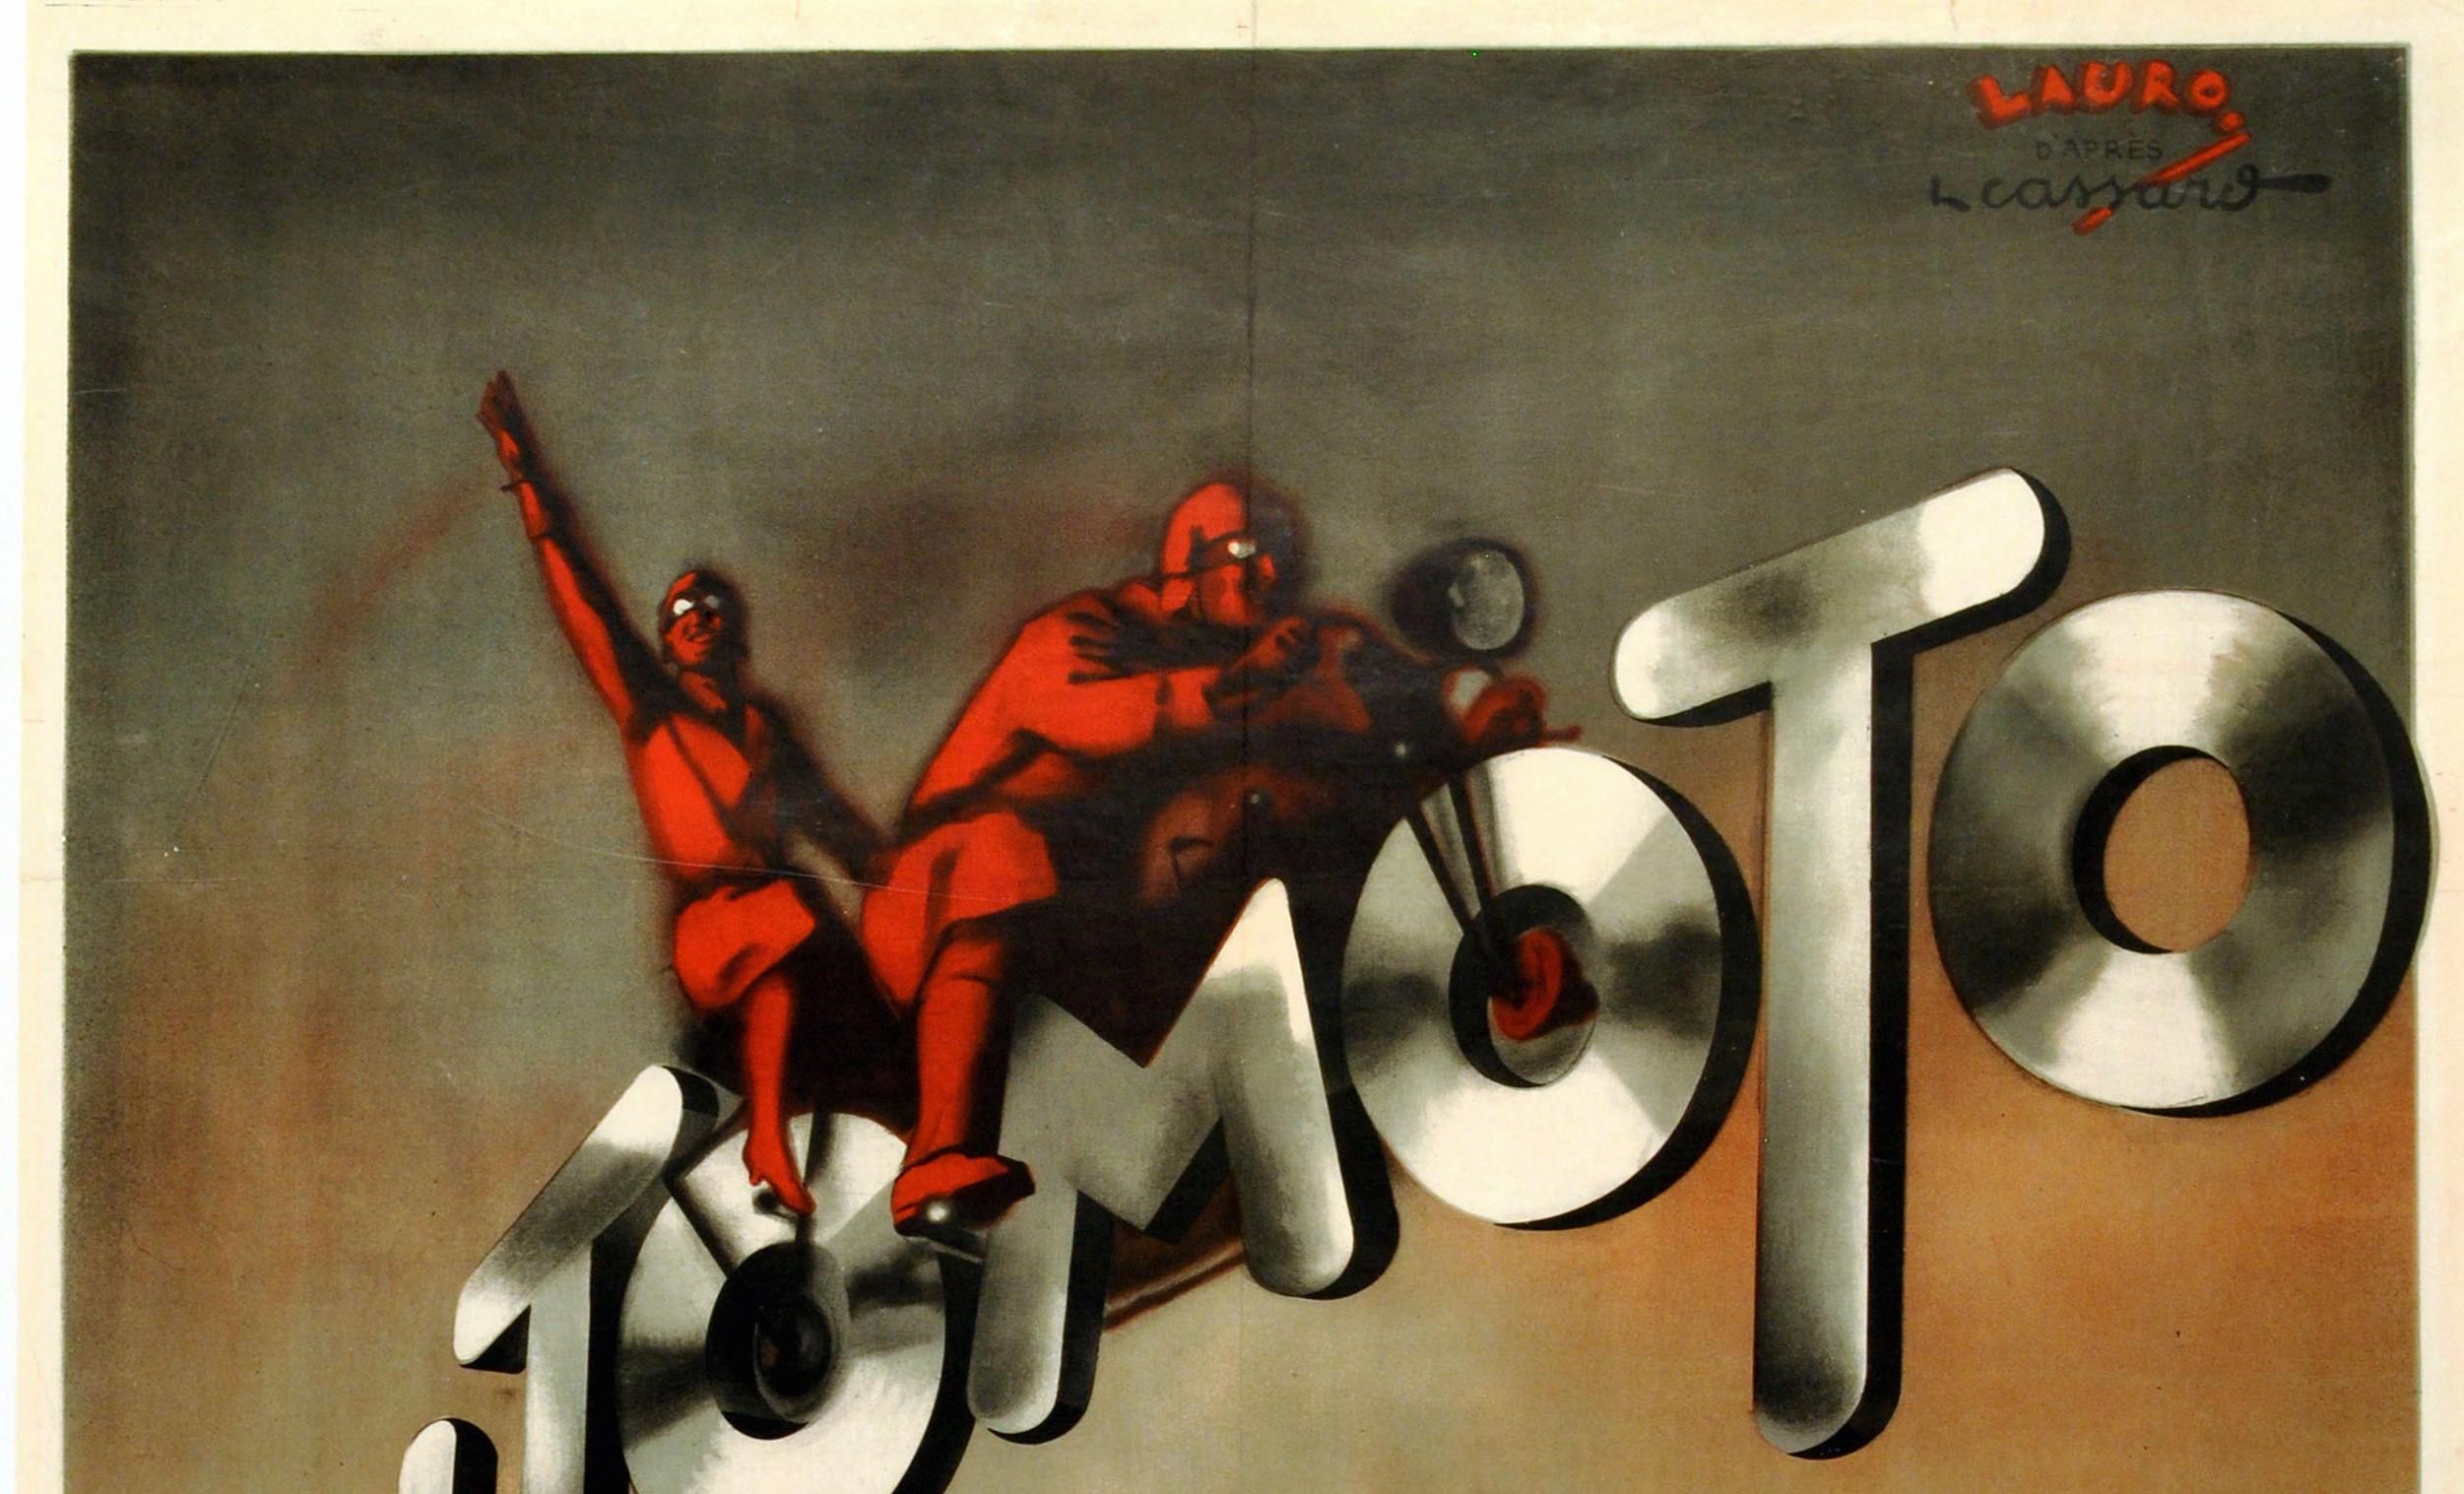 Original Vintage Art Deco Advertising Poster Automoto Motos Bicycles Motorcycles - Print by Unknown